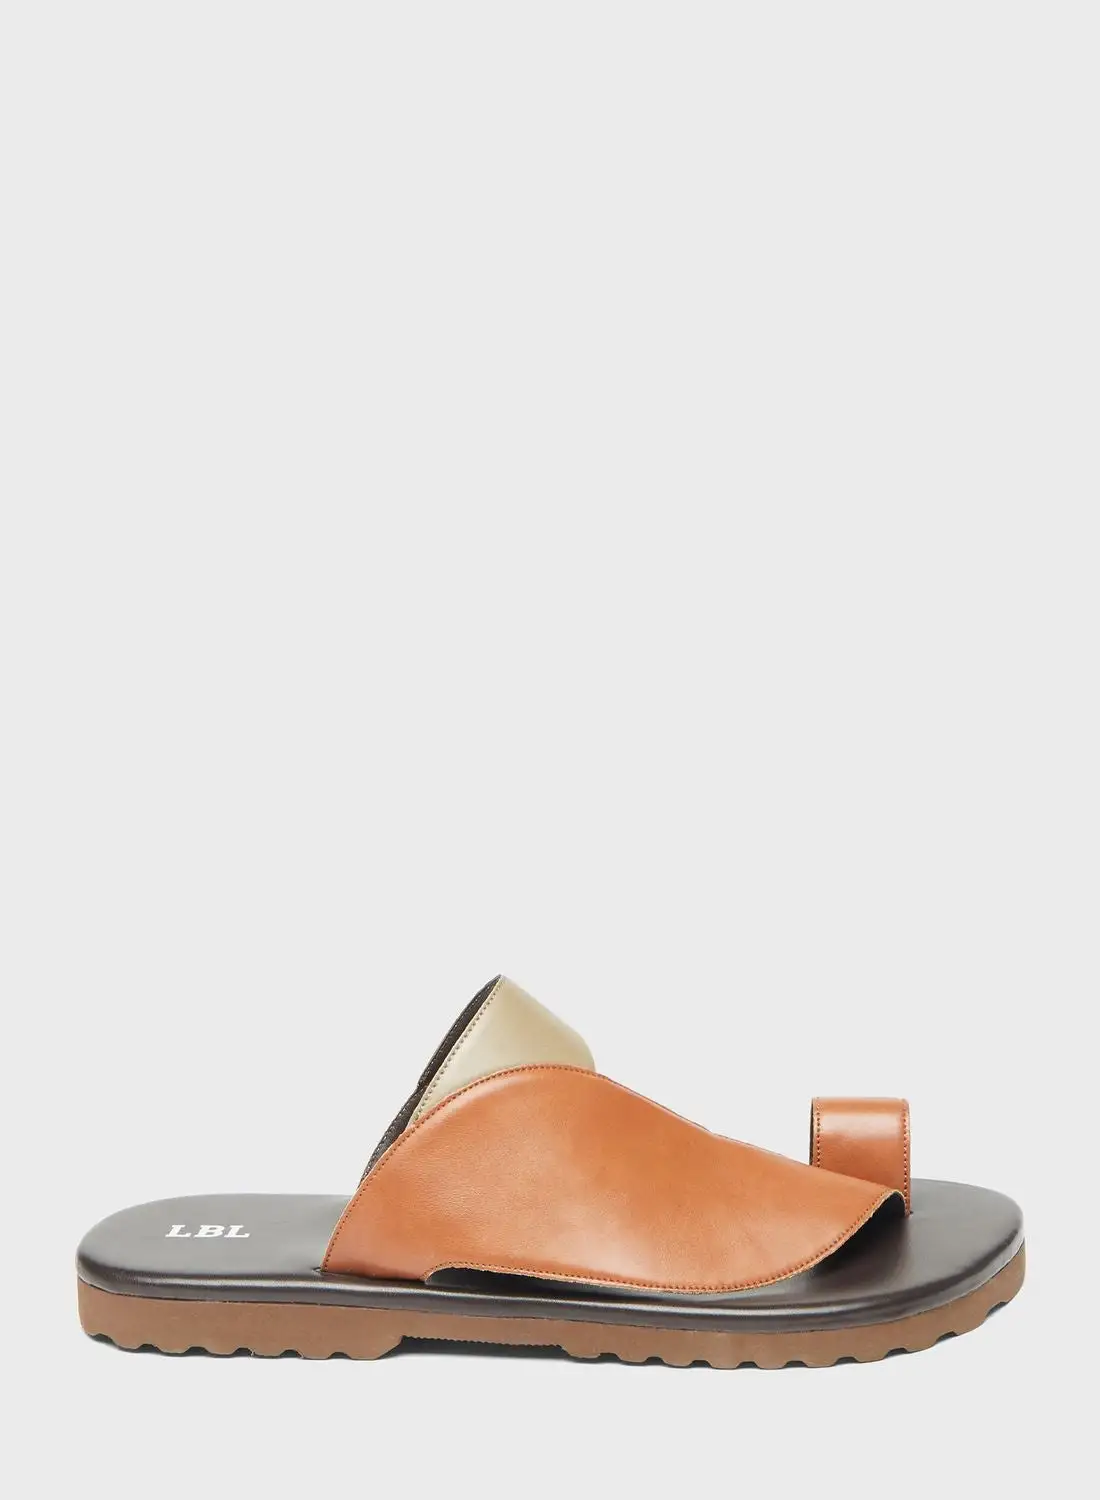 LBL by Shoexpress Casual Arabian Sandals